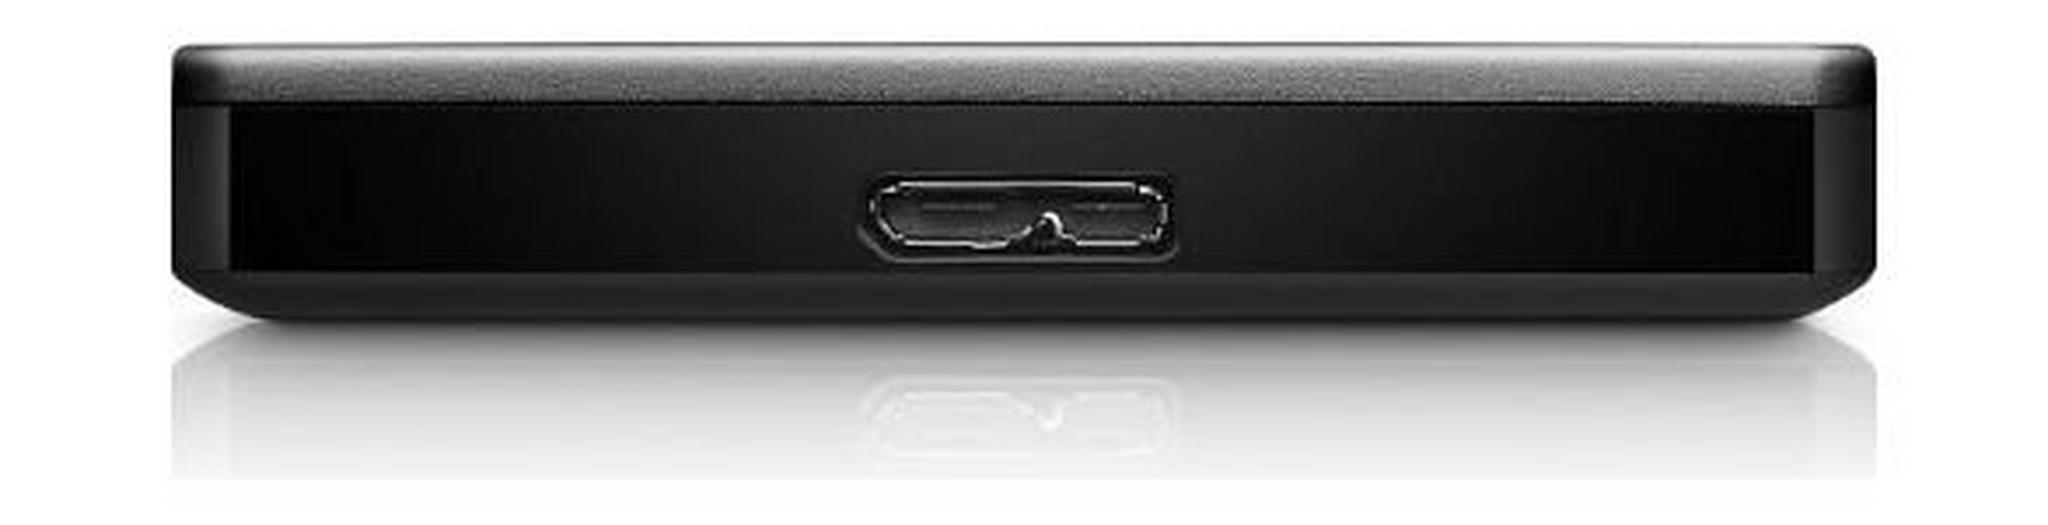 Seagate Back up Plus Slim 2TB Portable Hard Drive - Silver (STDR2000201)